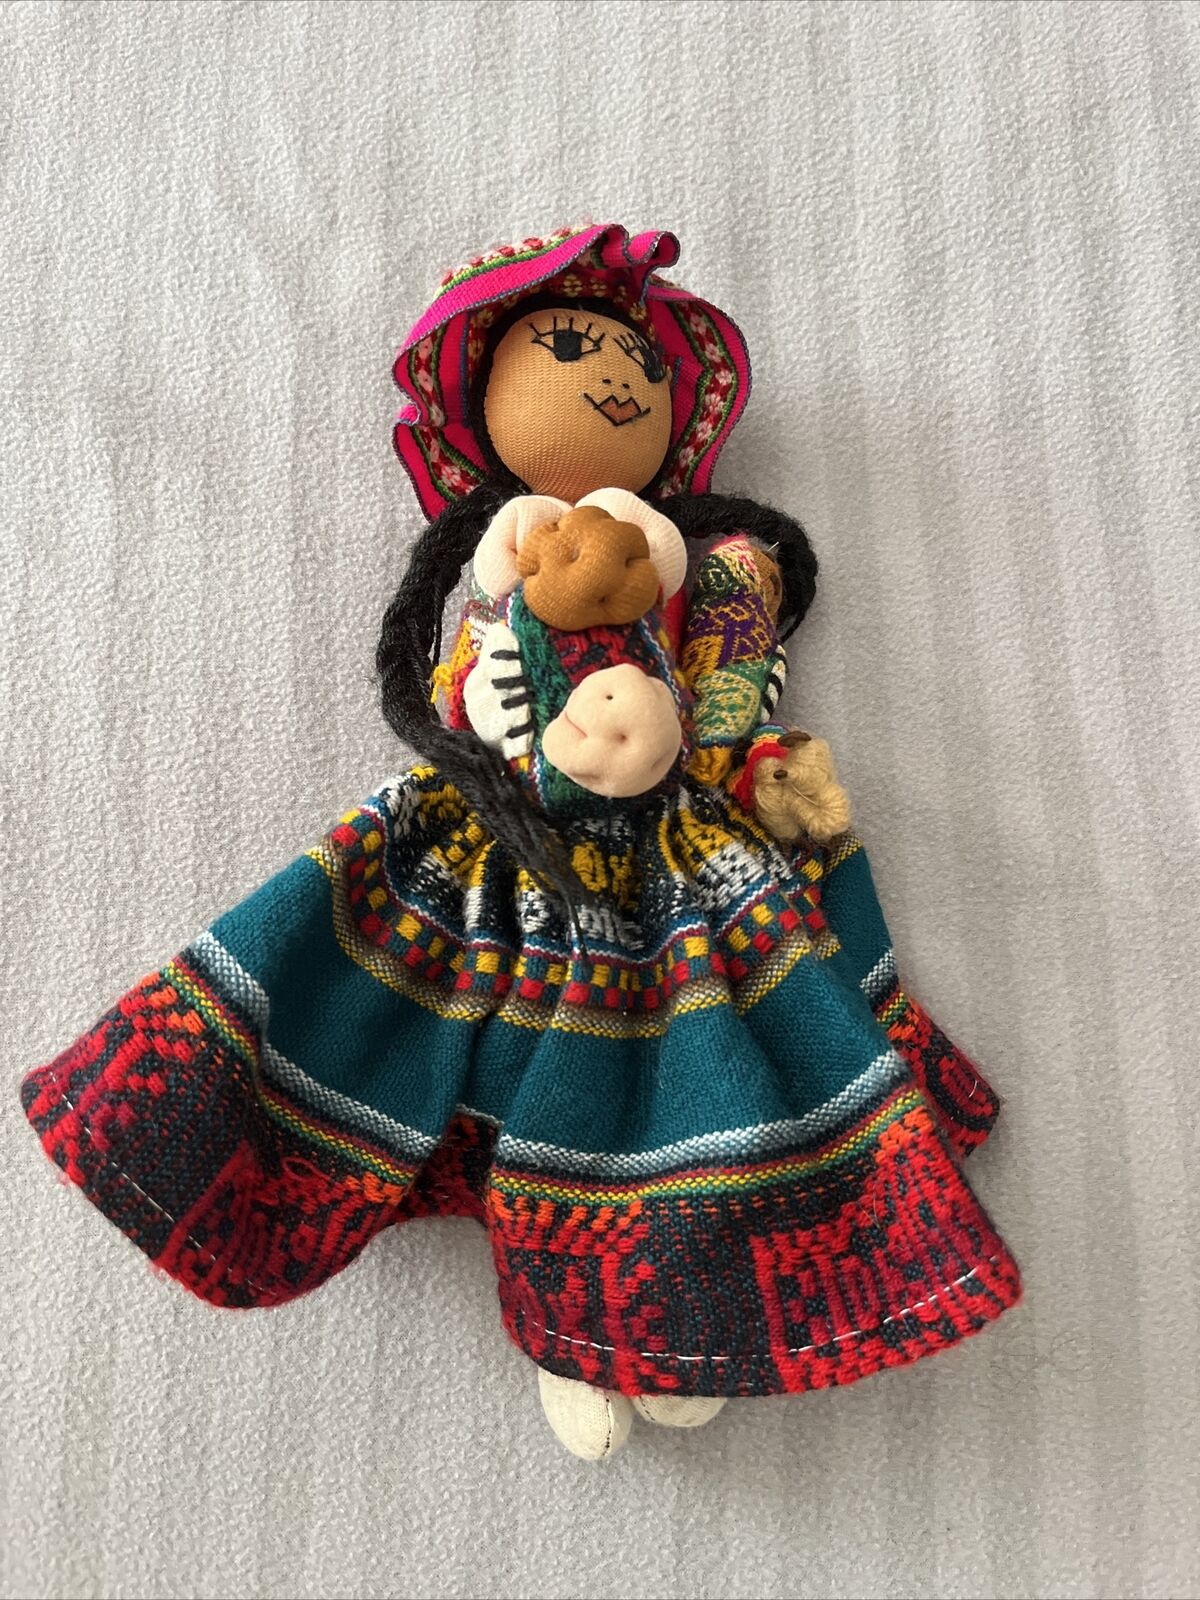 Vintage Peruvian Doll Handmade/ Folk Art/ 12 Inches